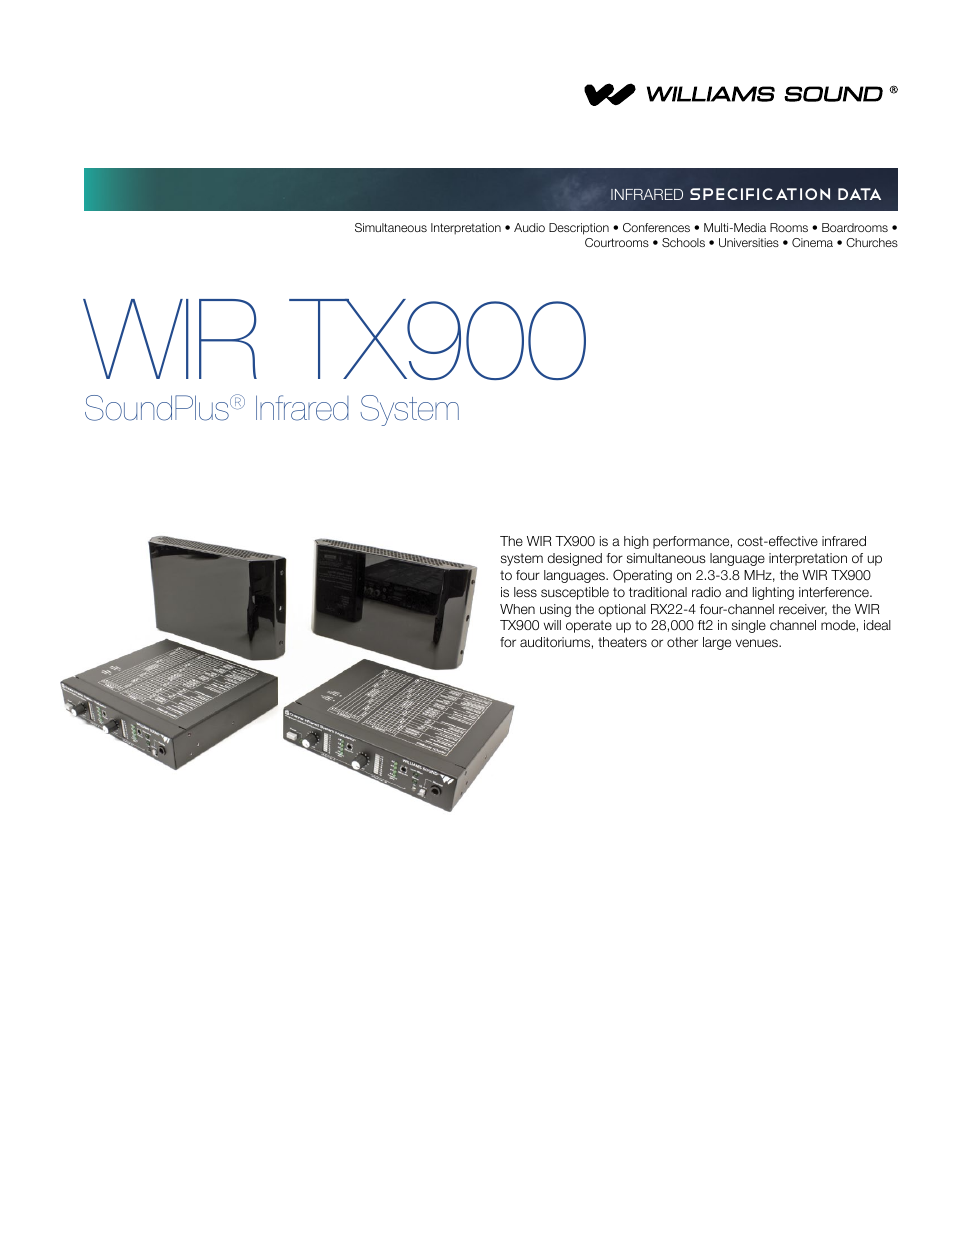 SoundPlus Infrared System WIRTX900